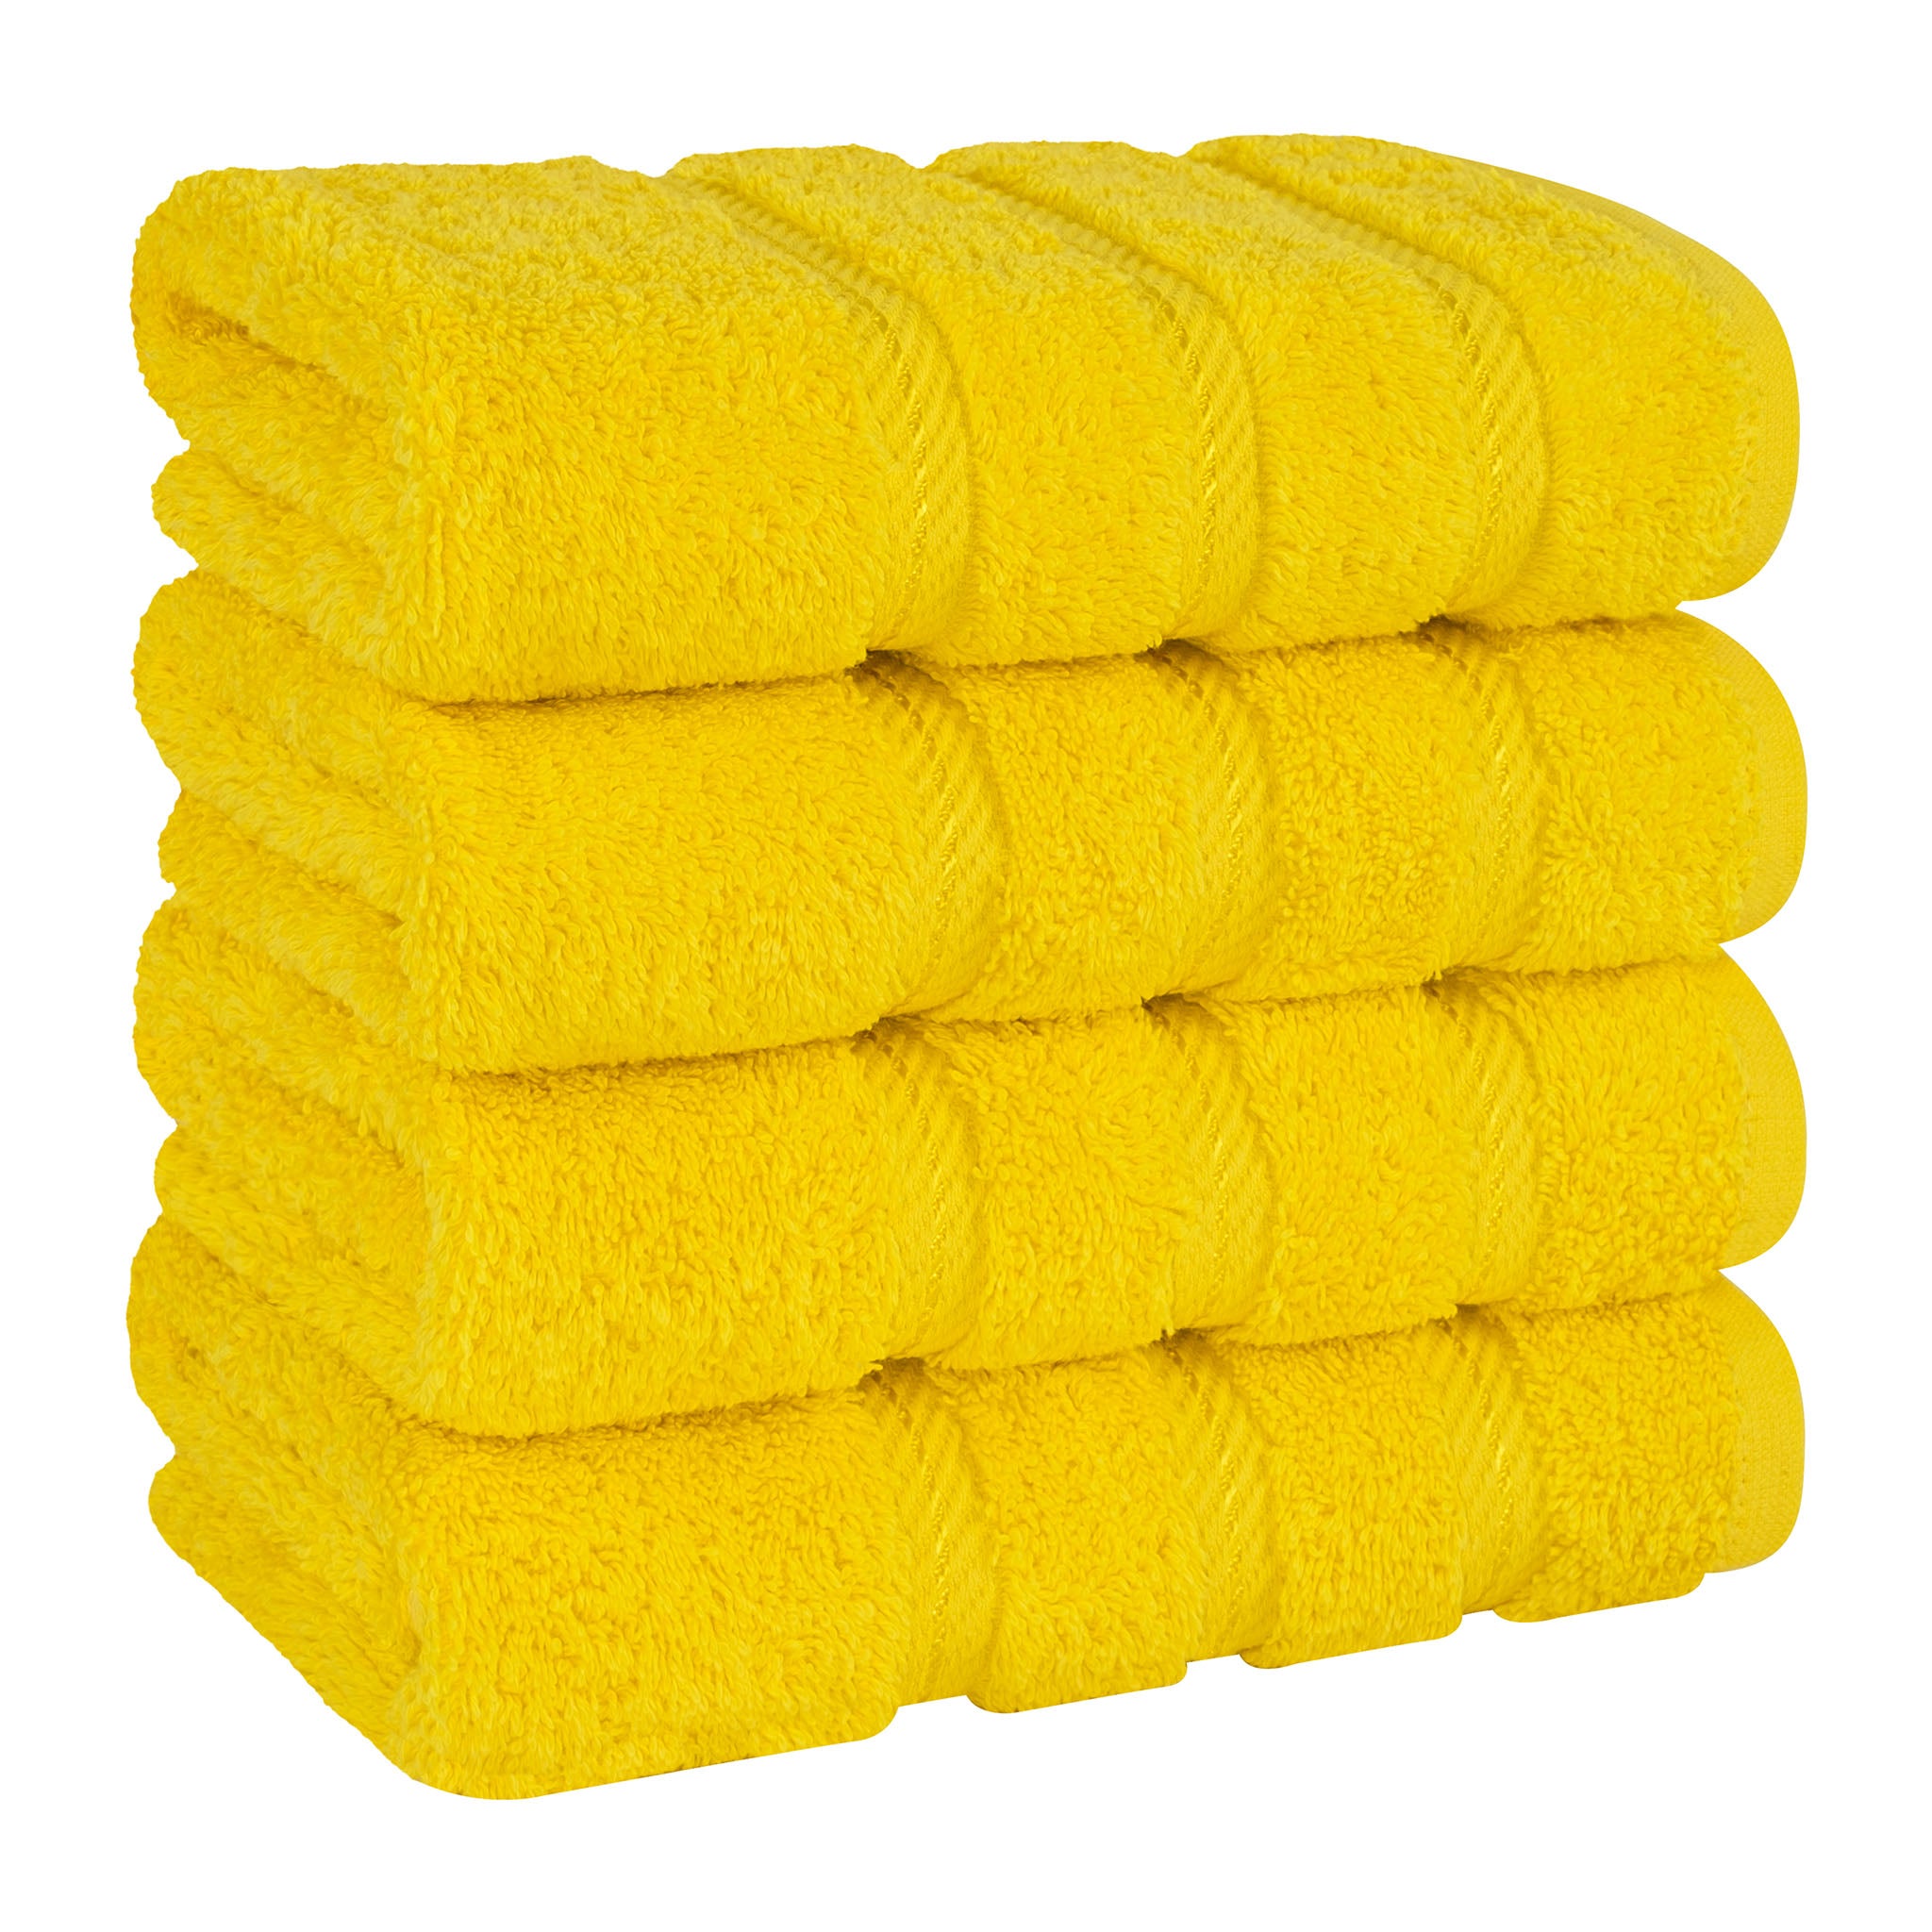  American Soft Linen 100% Turkish Cotton 4 Pack Hand Towel Set  yellow-1